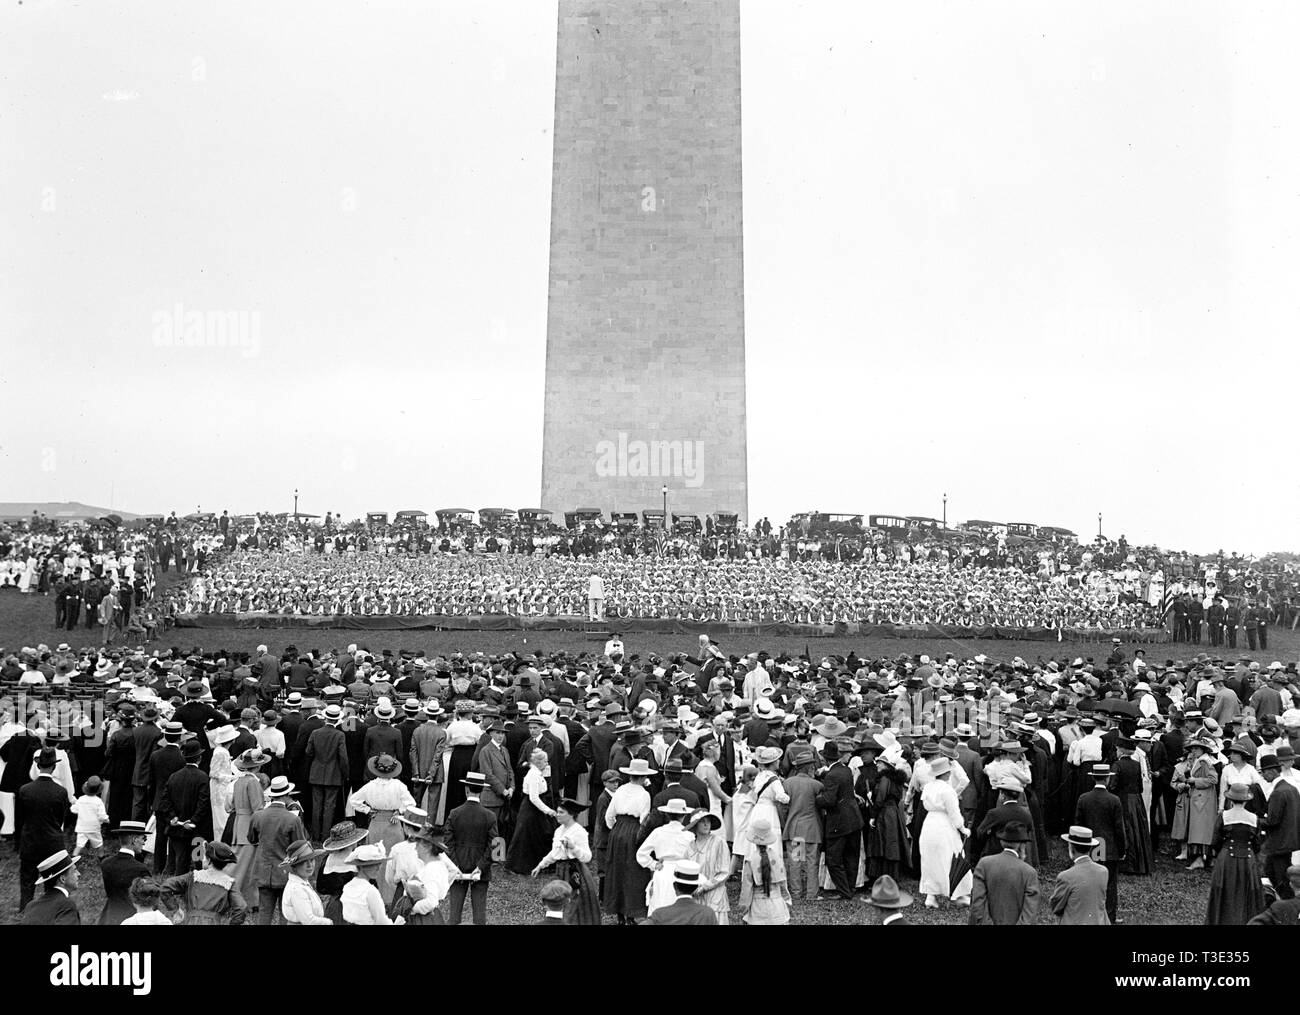 1917 Confederate Reunion - Human flag on Washington Monument grounds Stock Photo